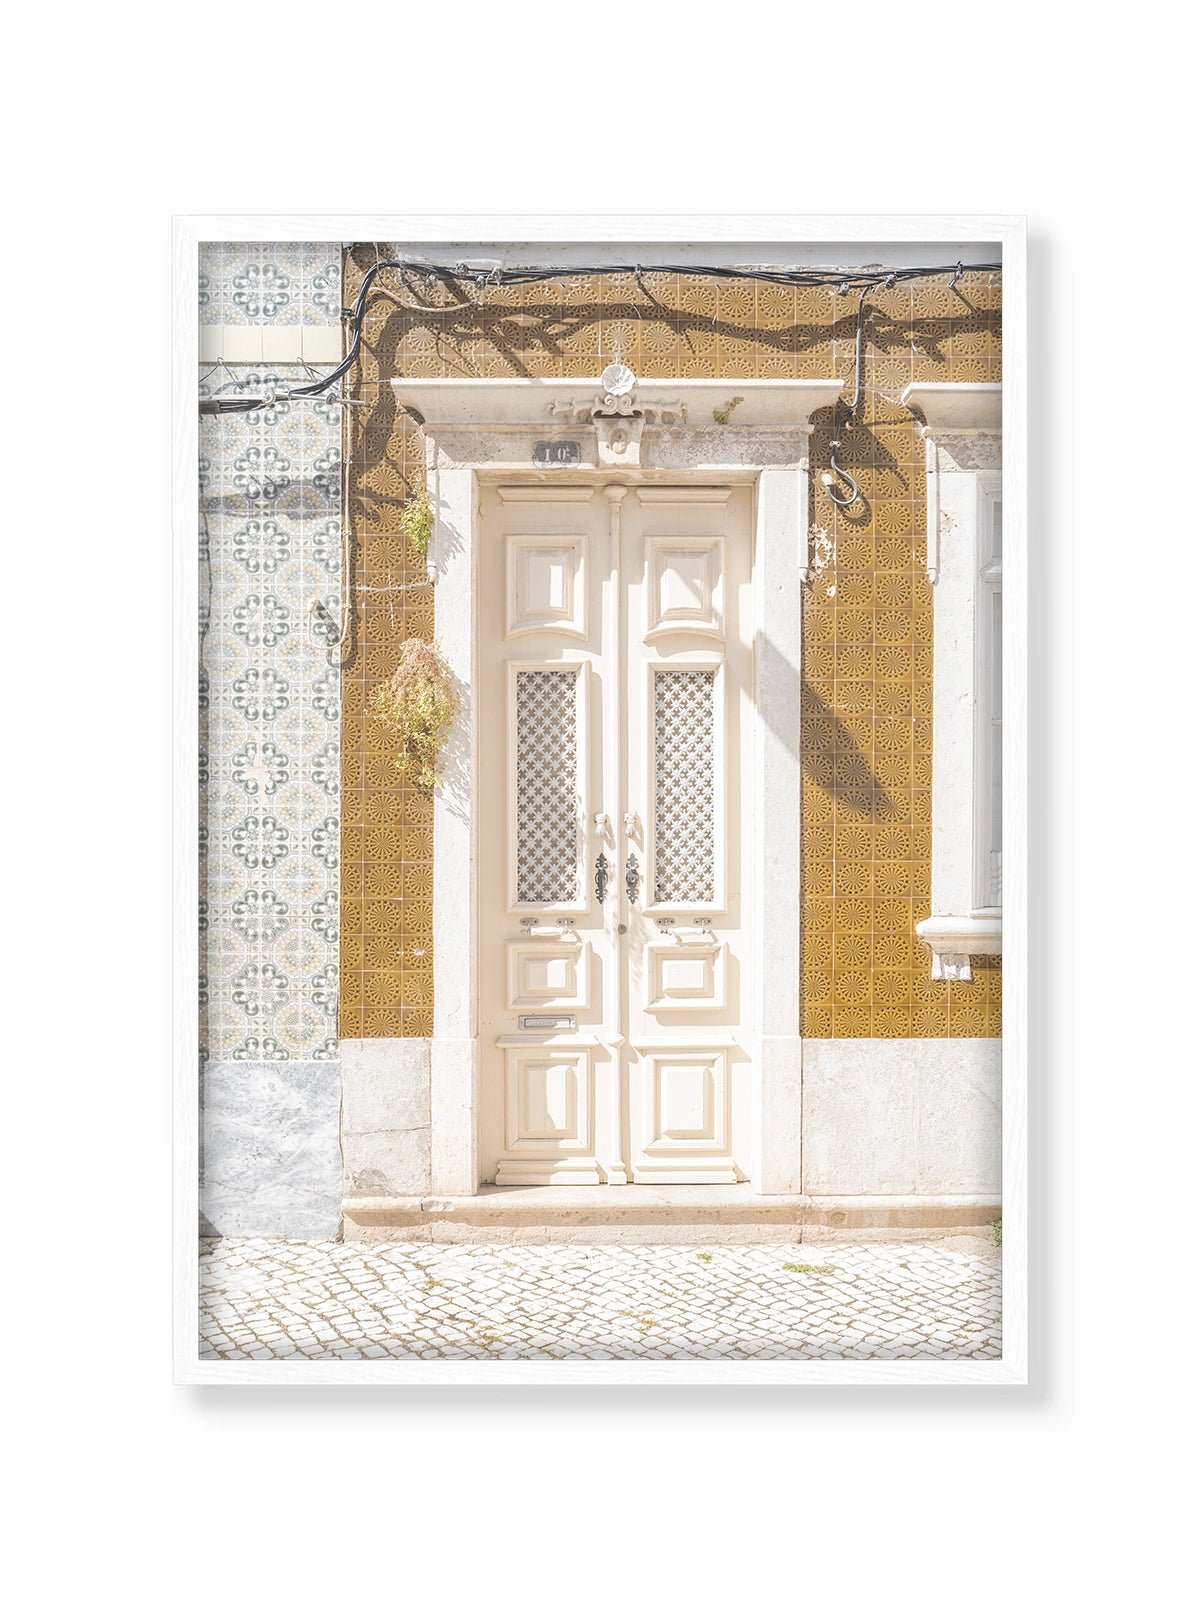 The White Entry - Lámina de Henrike Schenk - Decora tu casa en Nomadart